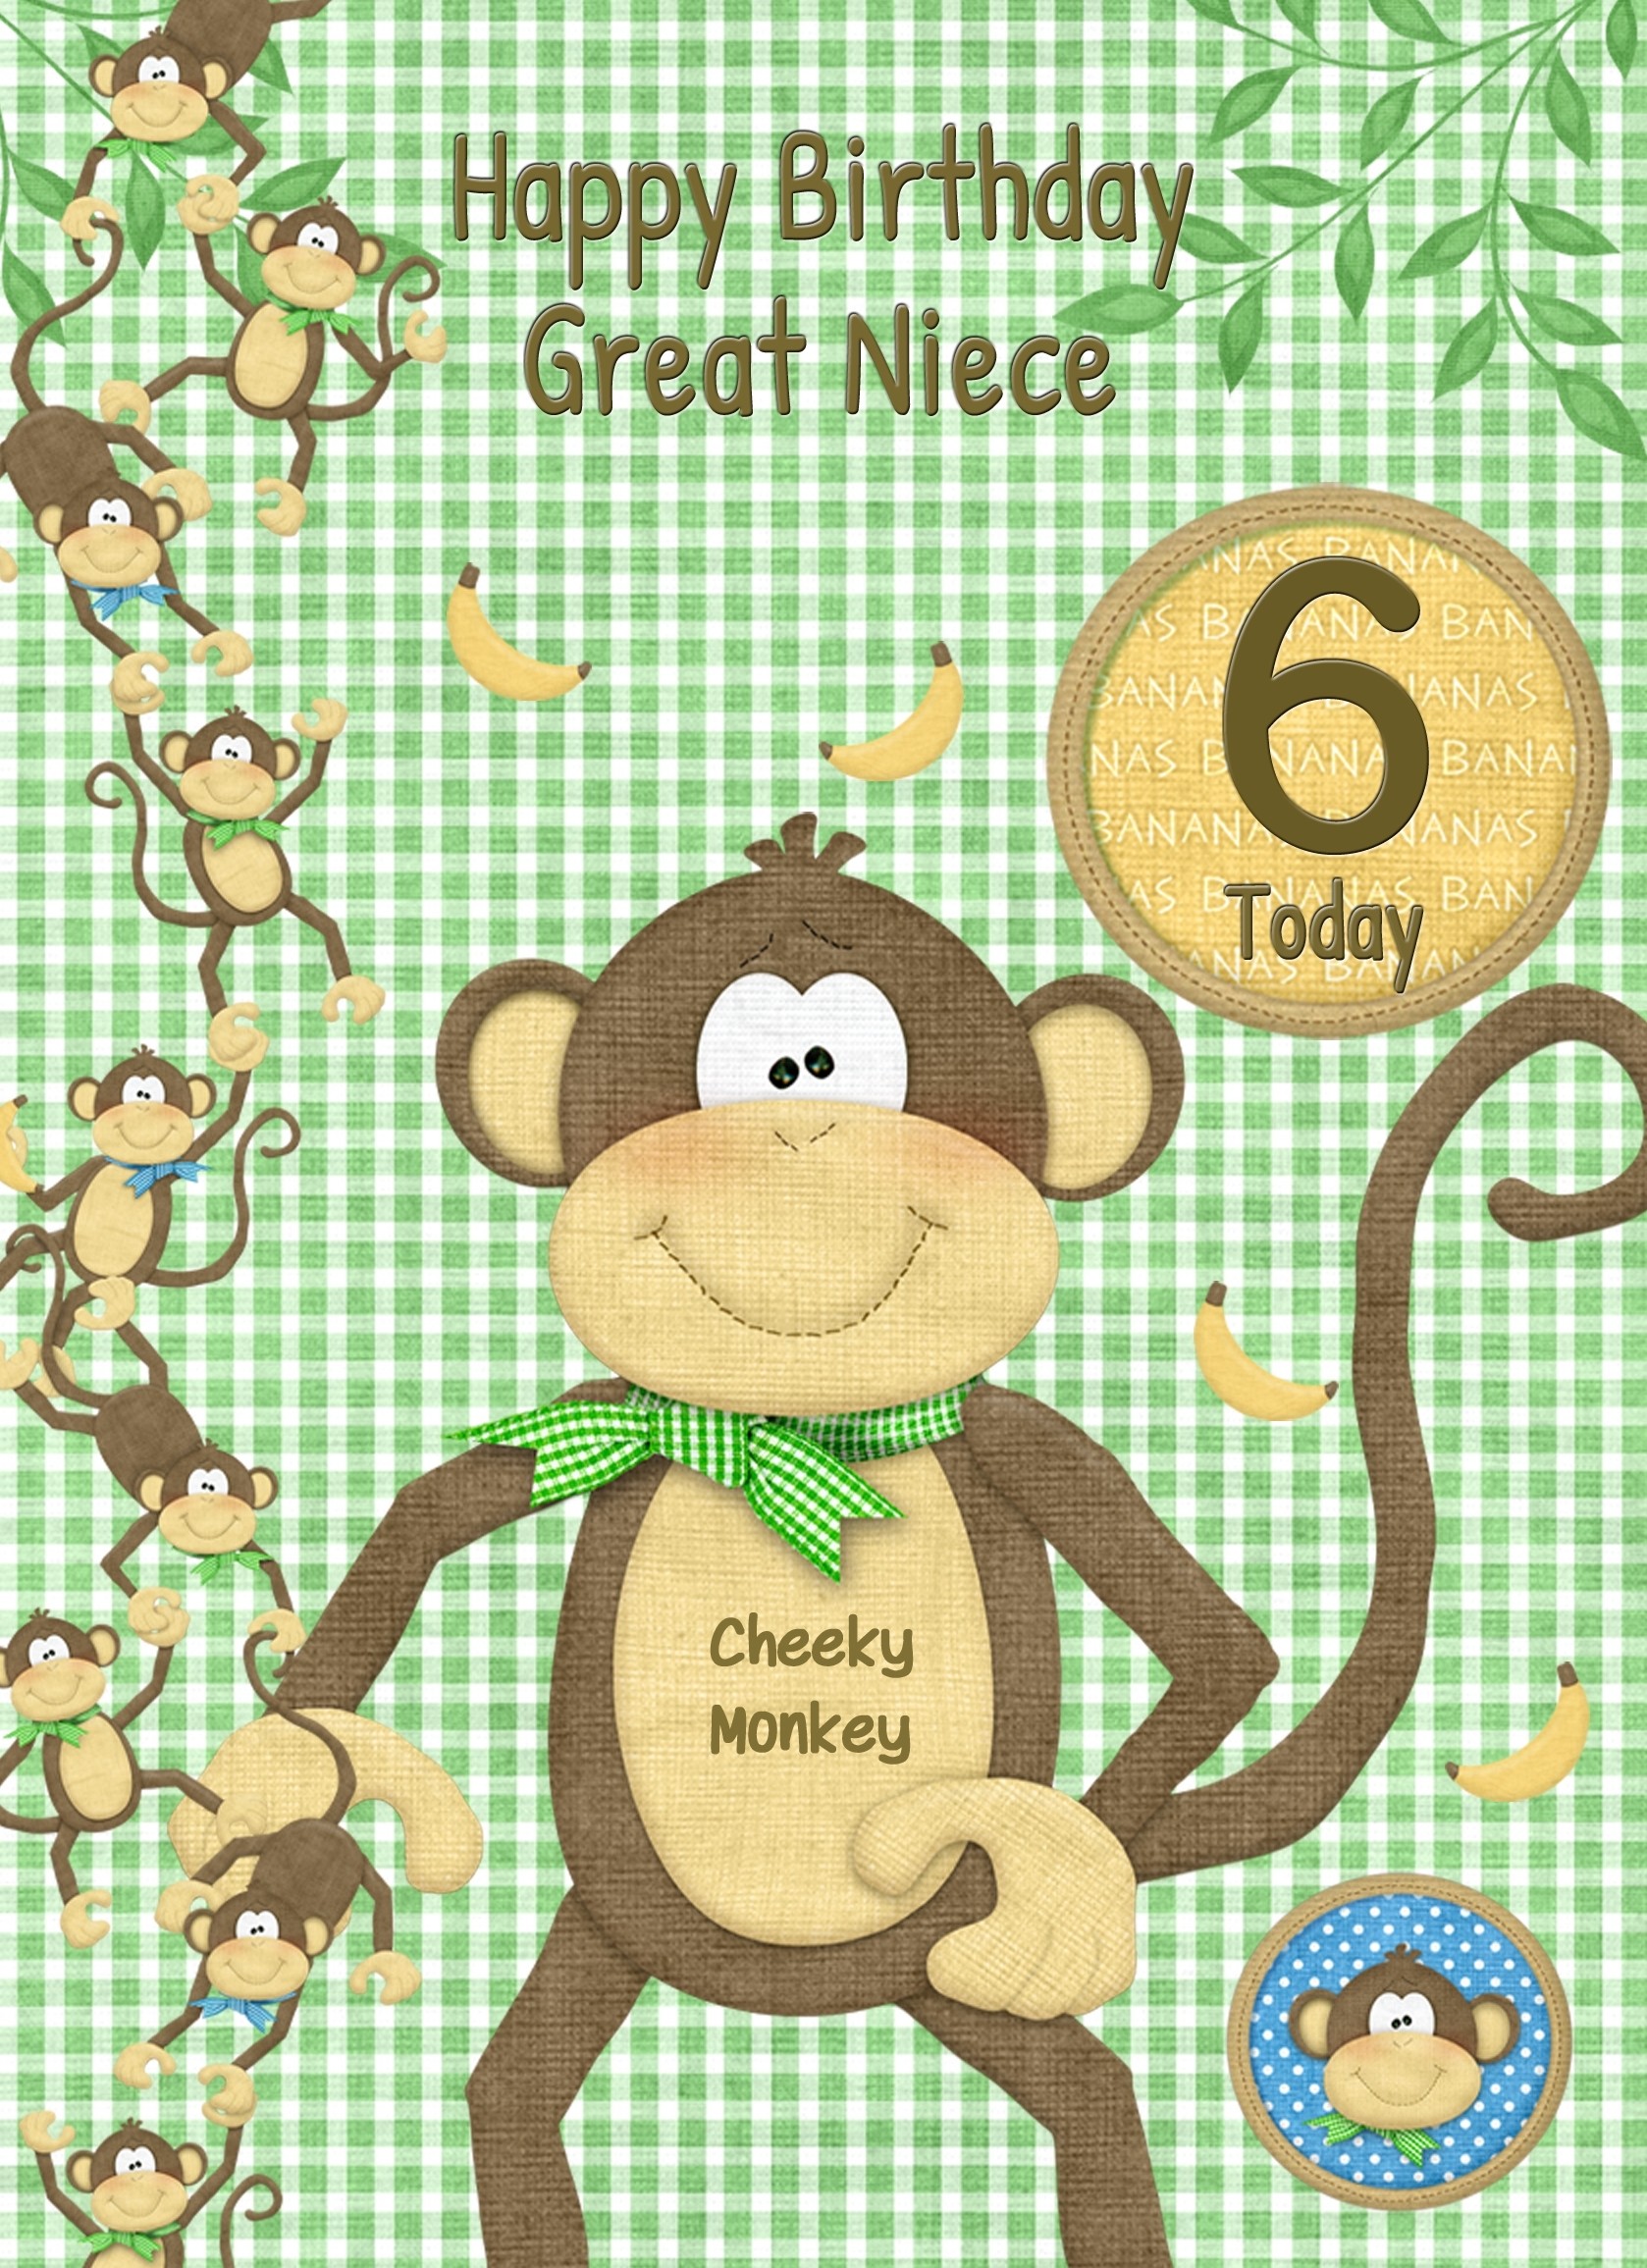 Kids 6th Birthday Cheeky Monkey Cartoon Card for Great Niece